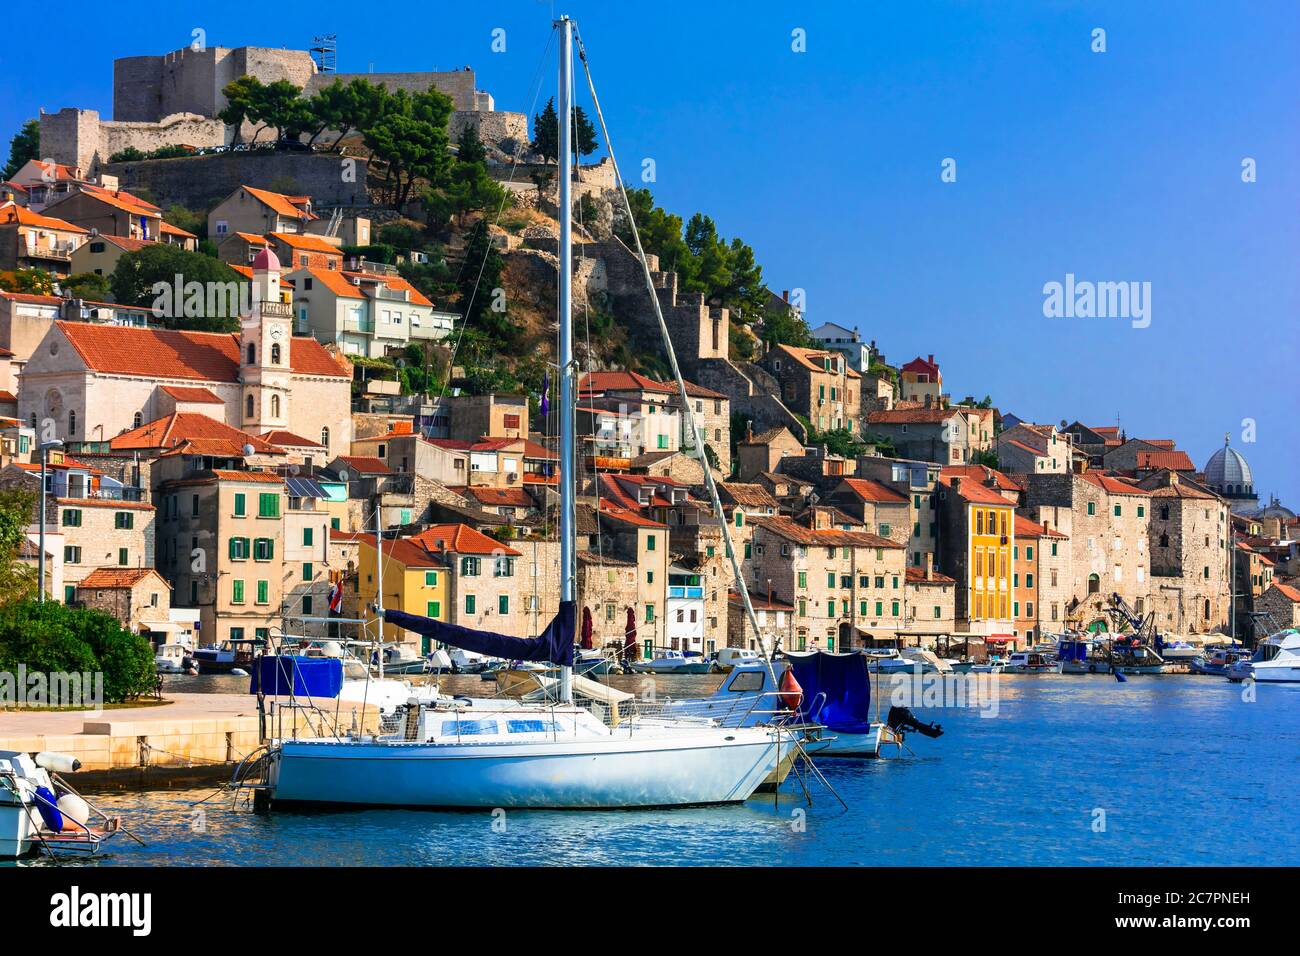 Beautiful places of Croatia - magnifiicent medieval town Sibenik in Adriatic coast Stock Photo